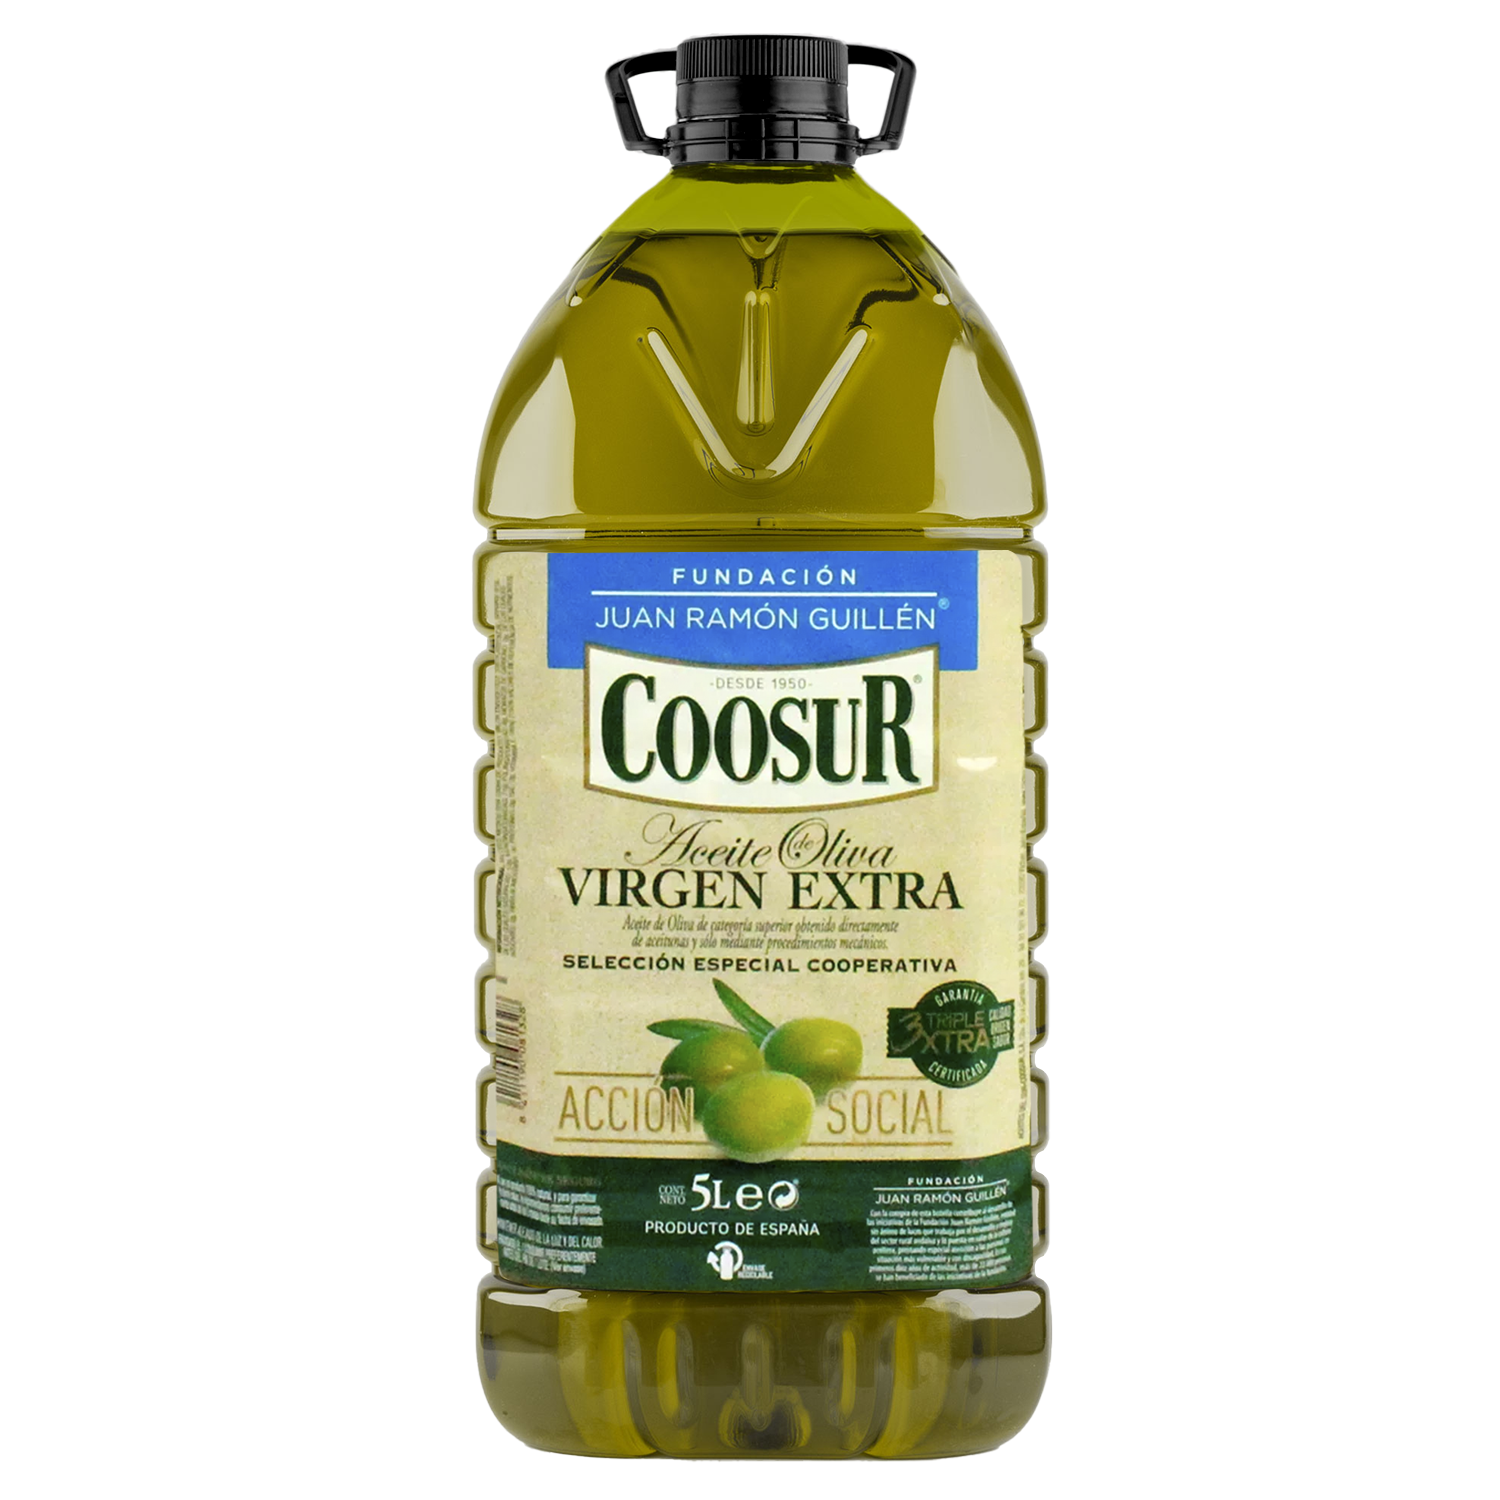 Garrafa de 5 litros de Aceite de Oliva Virgen Extra